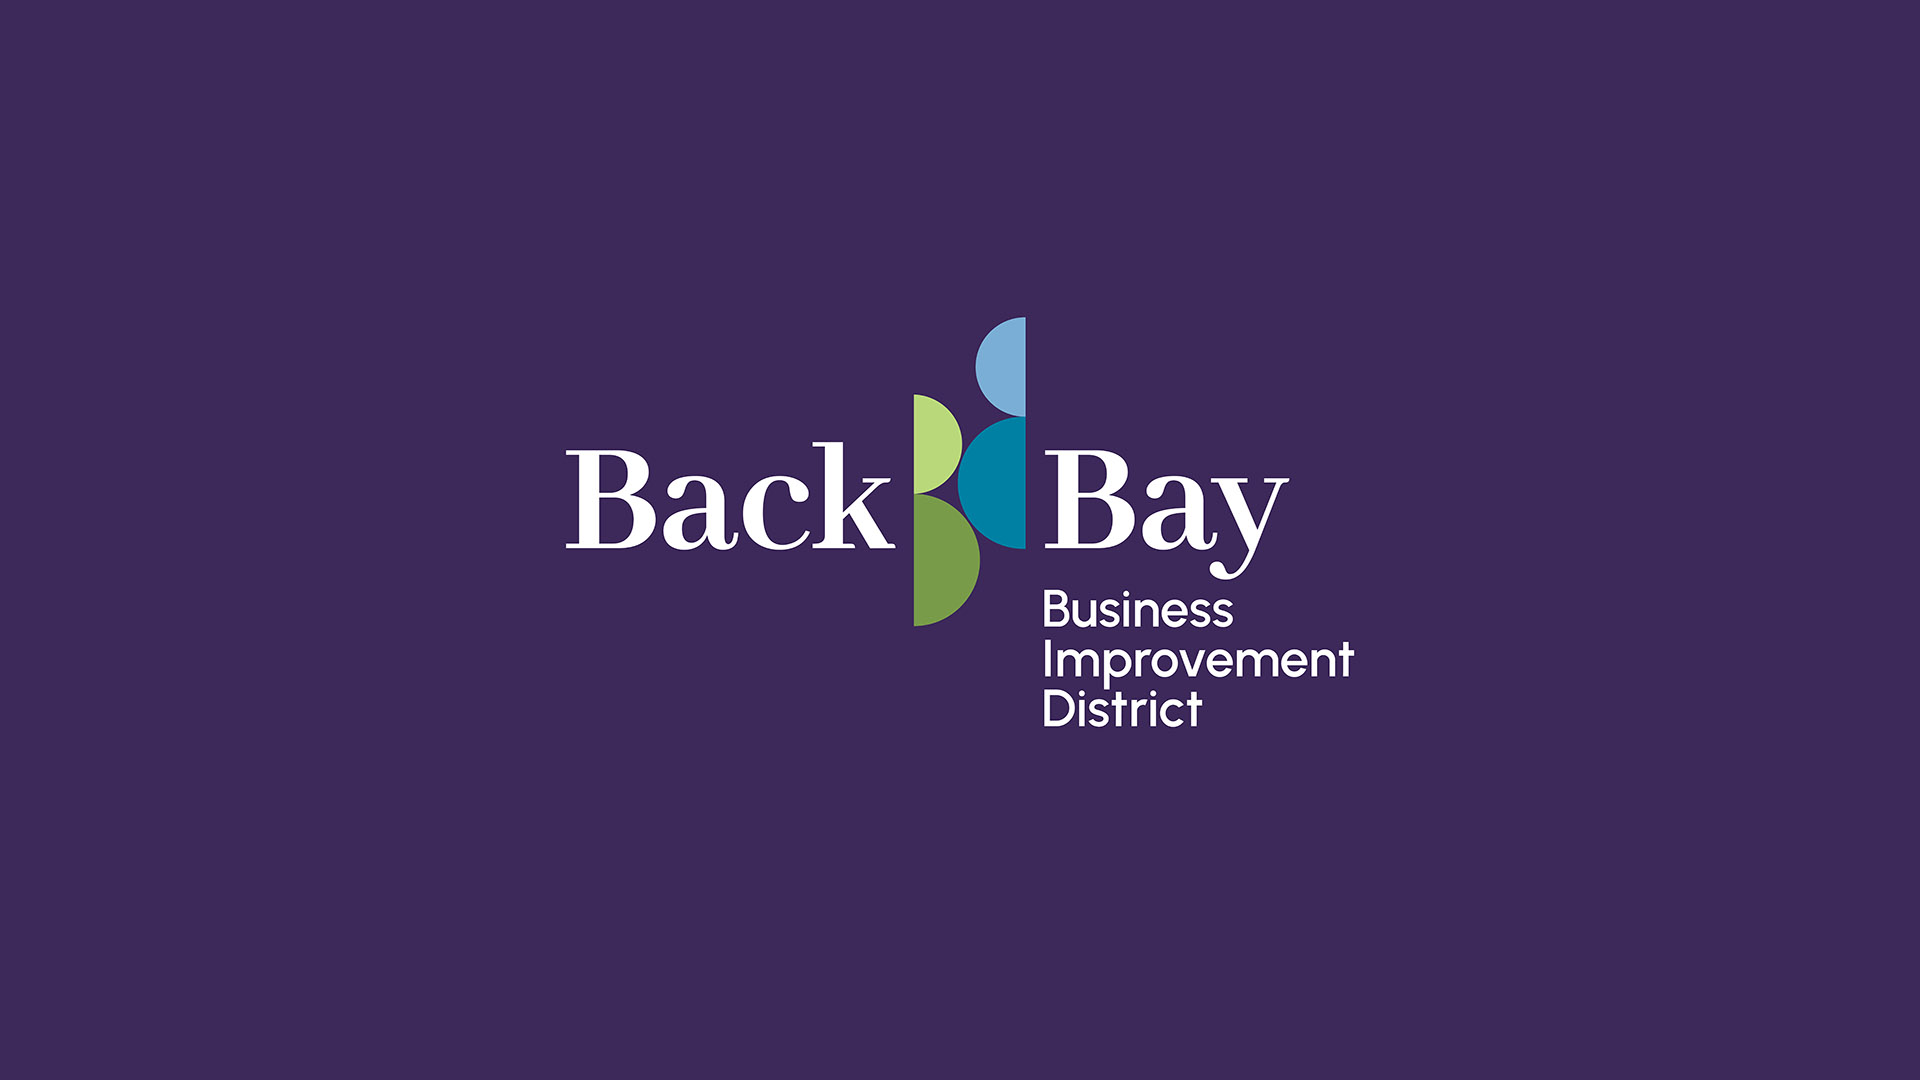 back bay business improvement district logo on purple